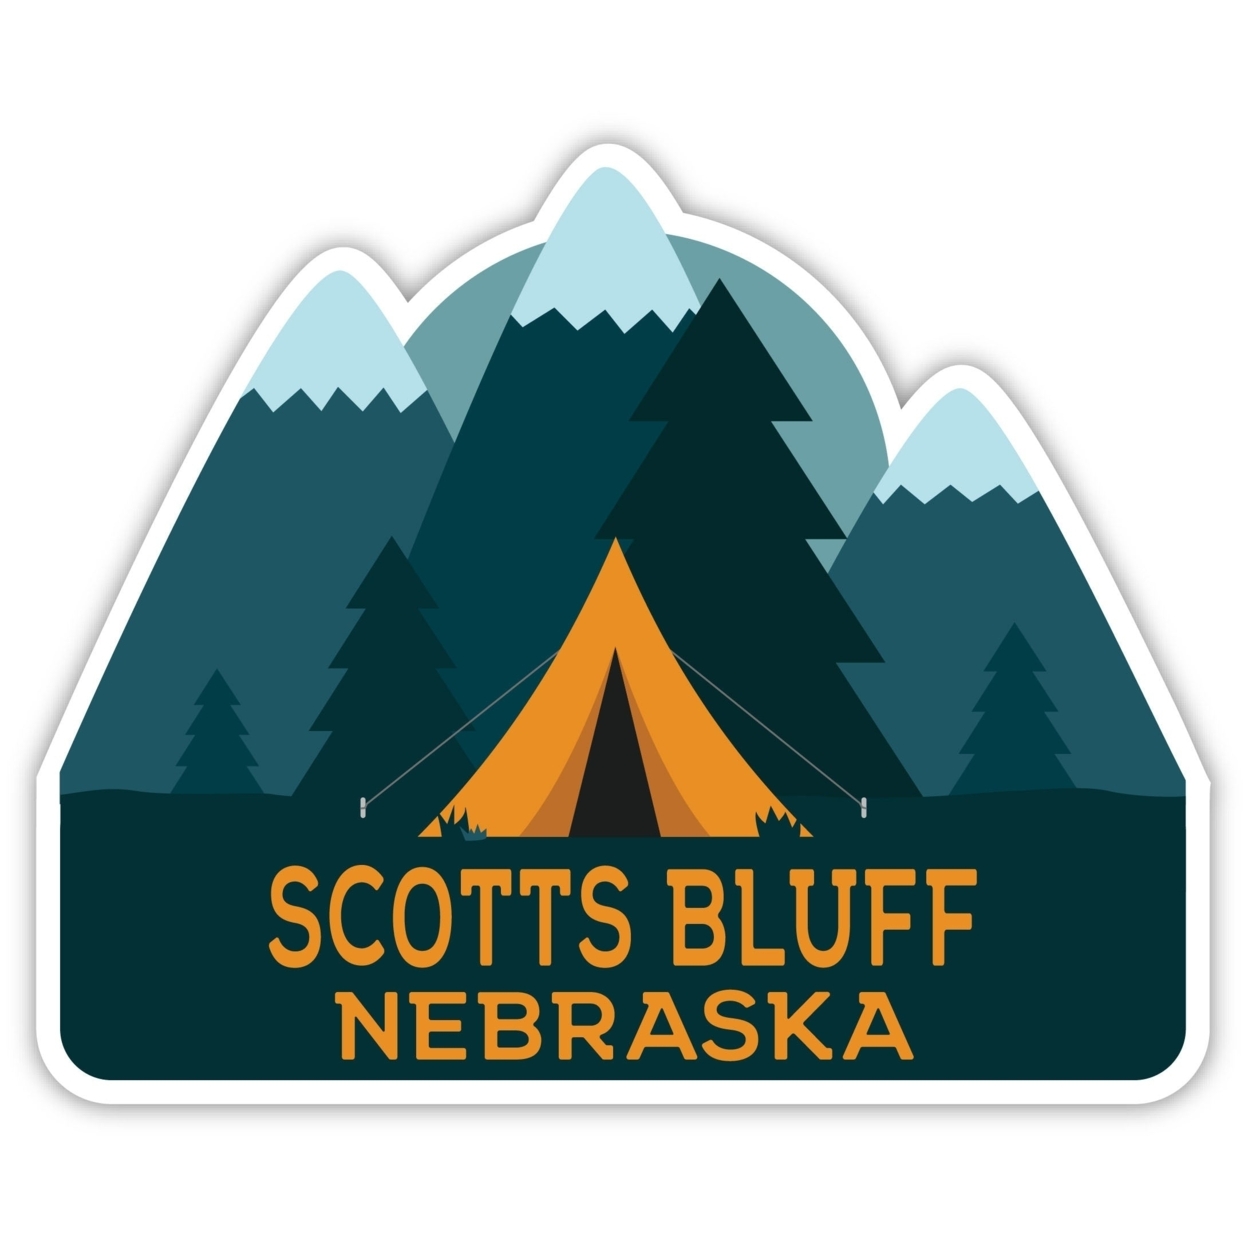 Scotts Bluff Nebraska Souvenir Decorative Stickers (Choose Theme And Size) - Single Unit, 4-Inch, Tent